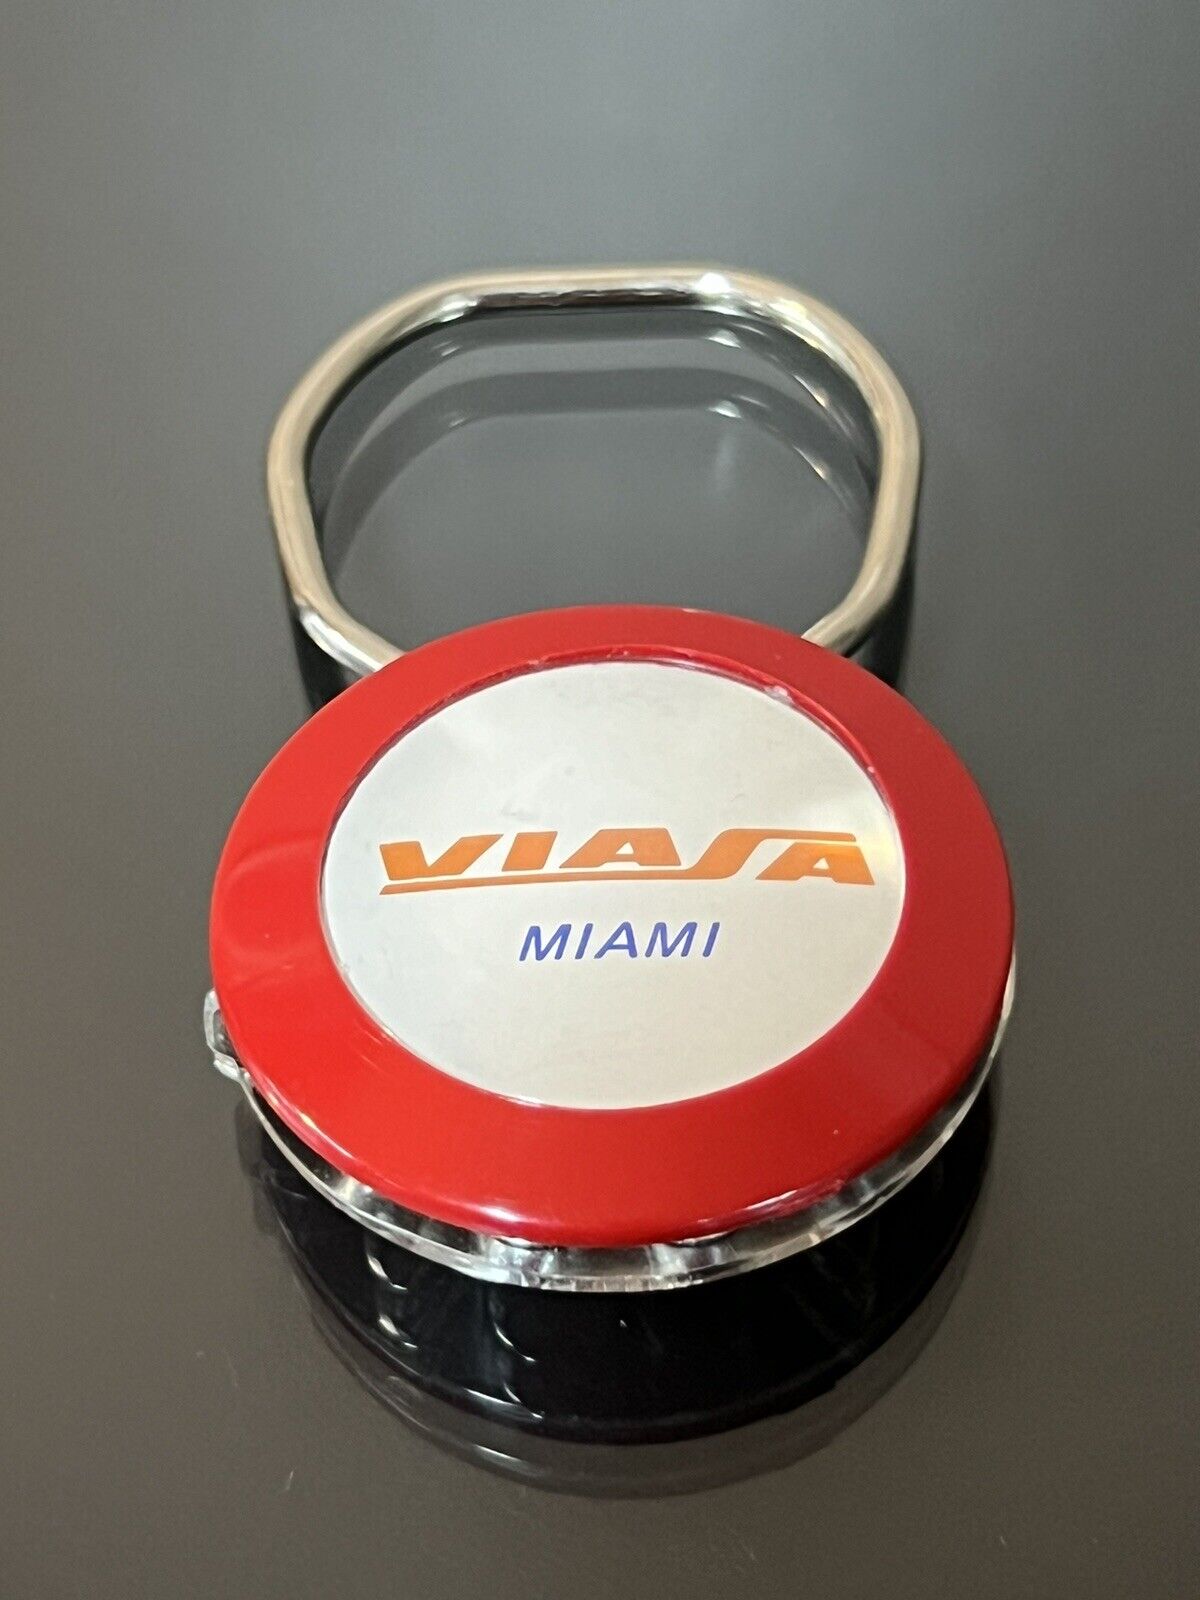 Vintage VIASA Venezuelan Airlines Key Fob- Miami 